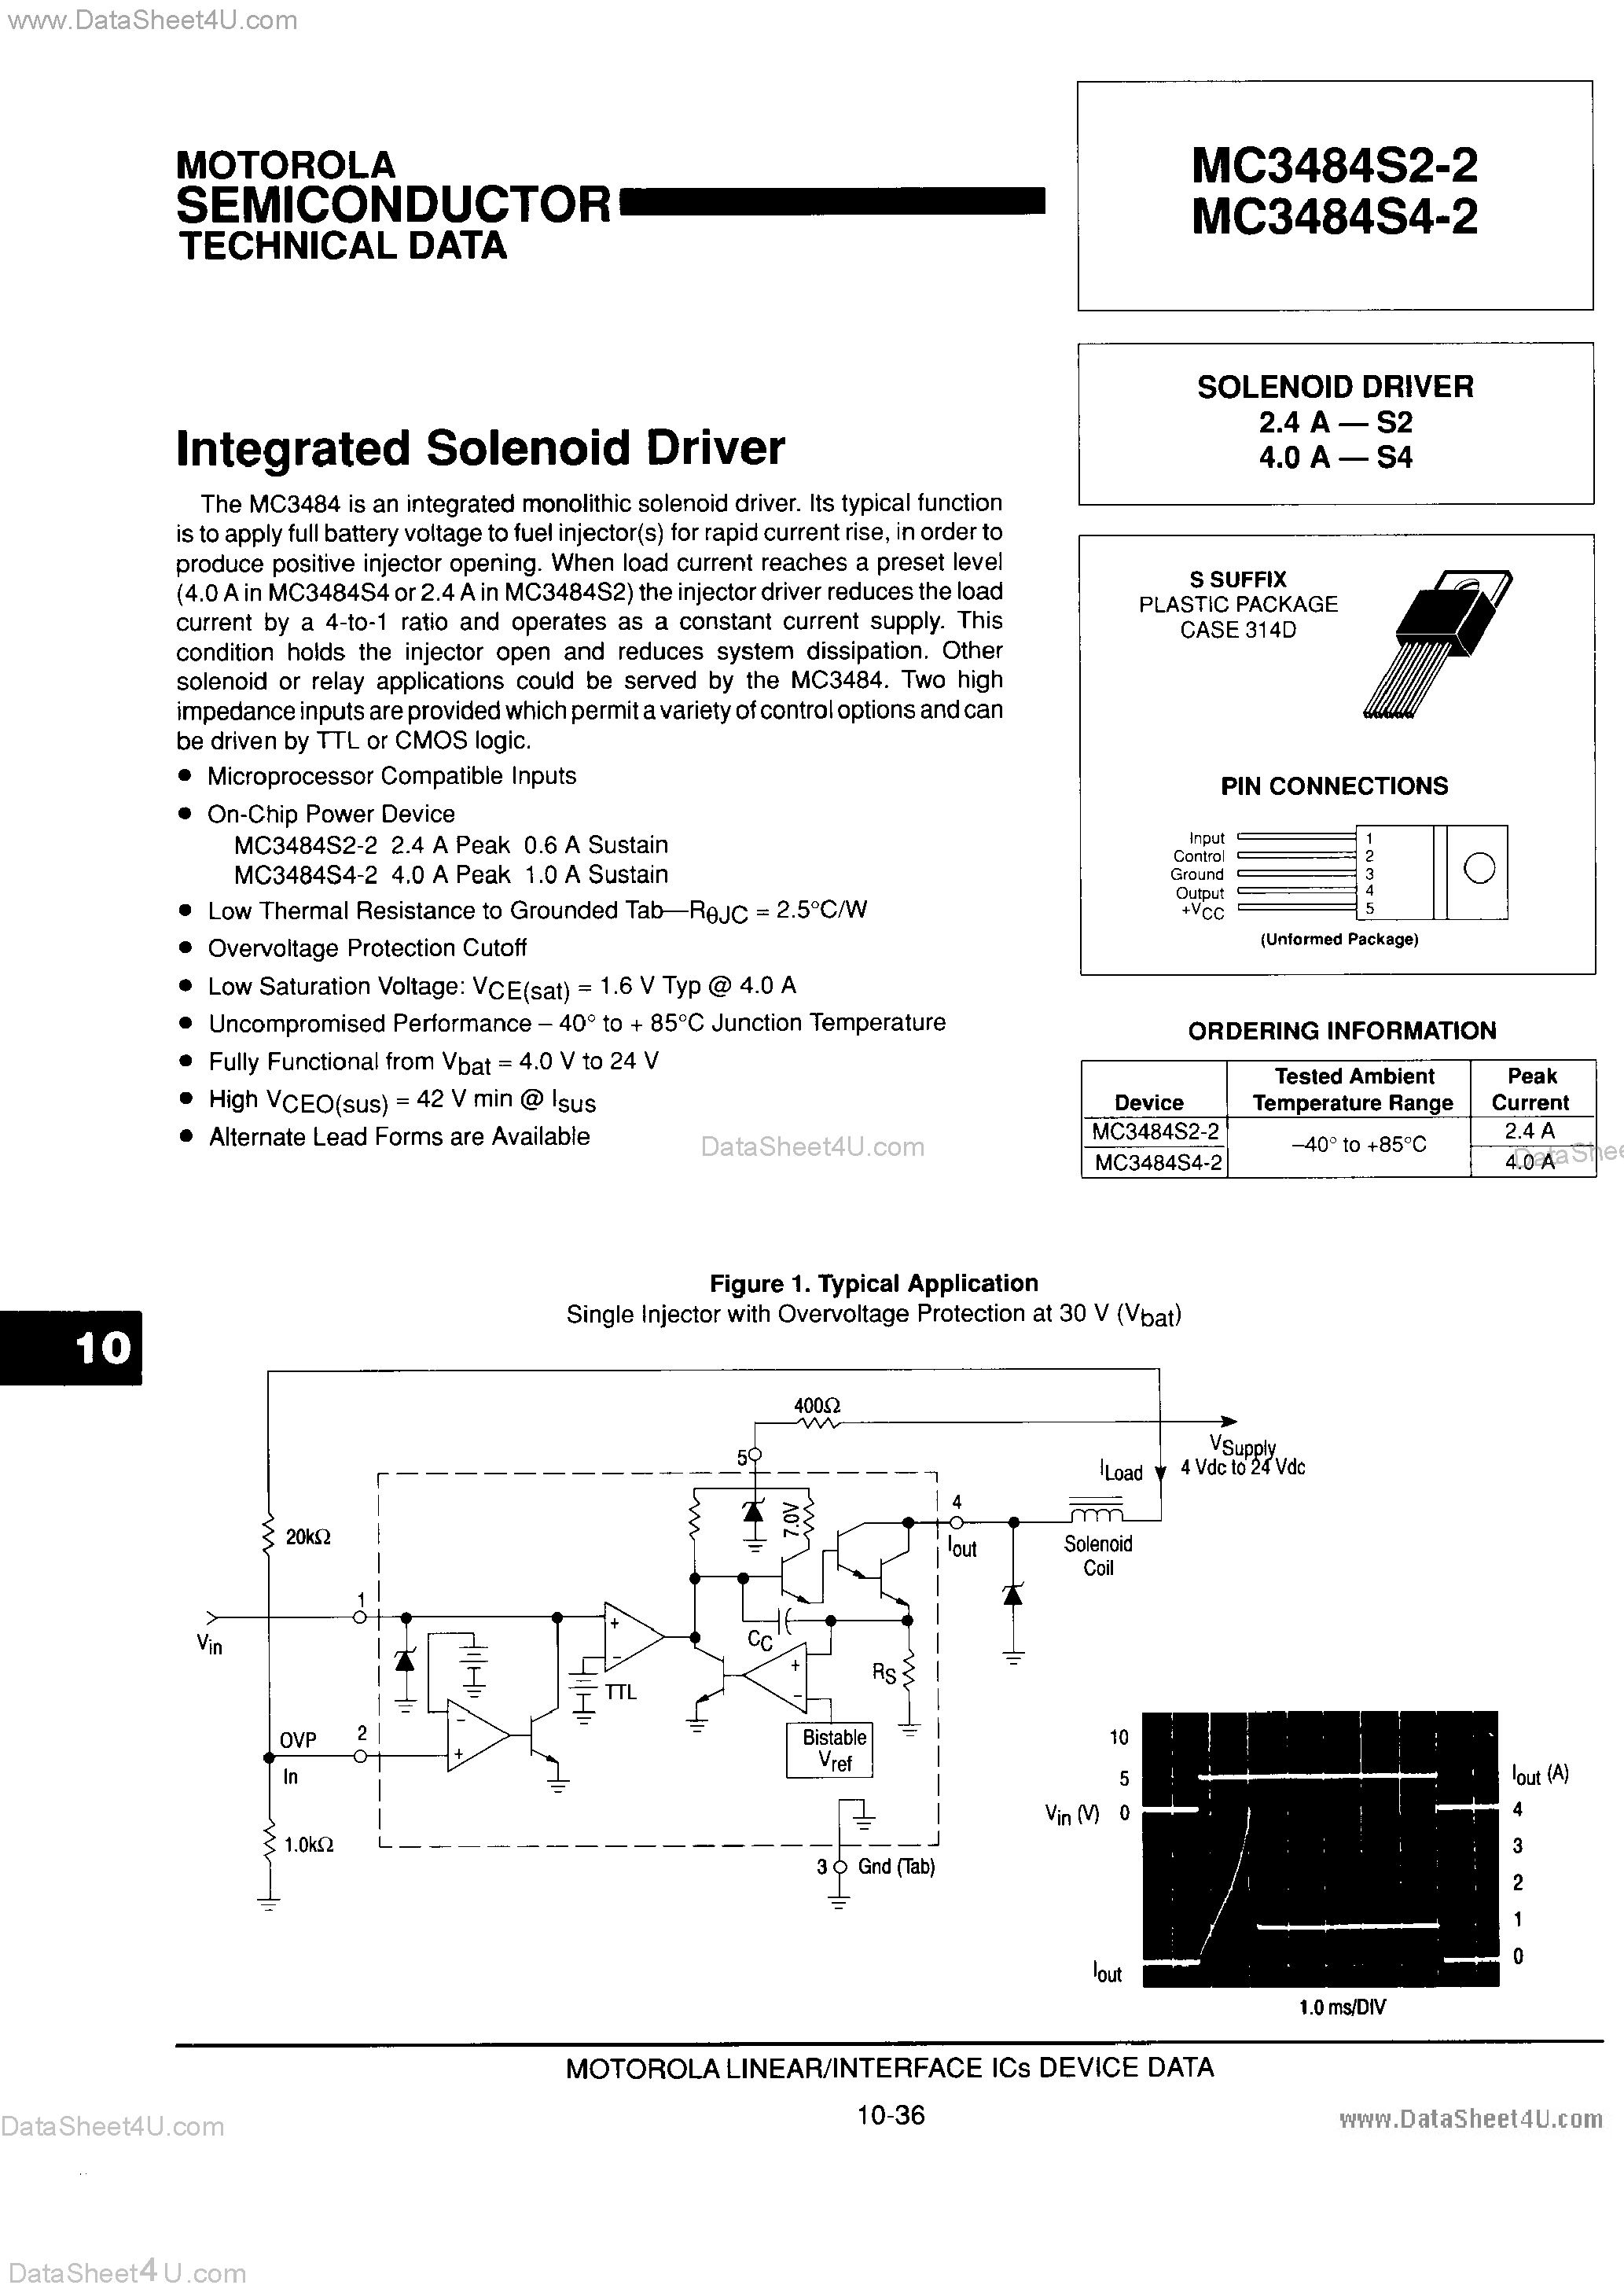 Даташит MC3484S2-2 - (MC3484S2-2 / MC3484S4-2) Integrated Solenoid Driver страница 1